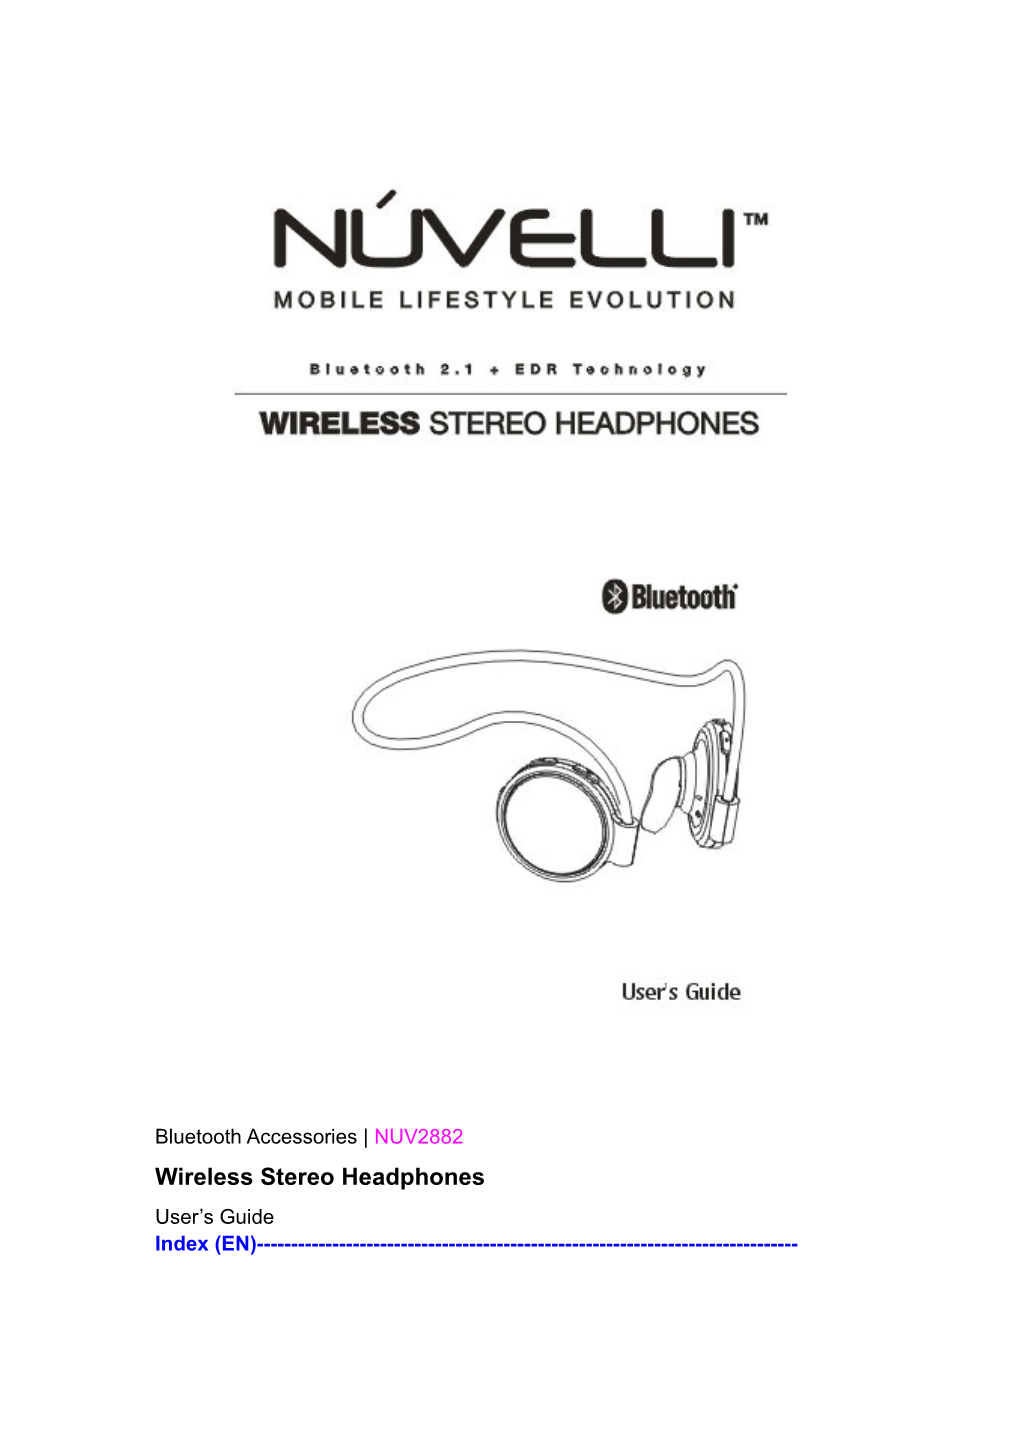 Wireless Stereo Headphones